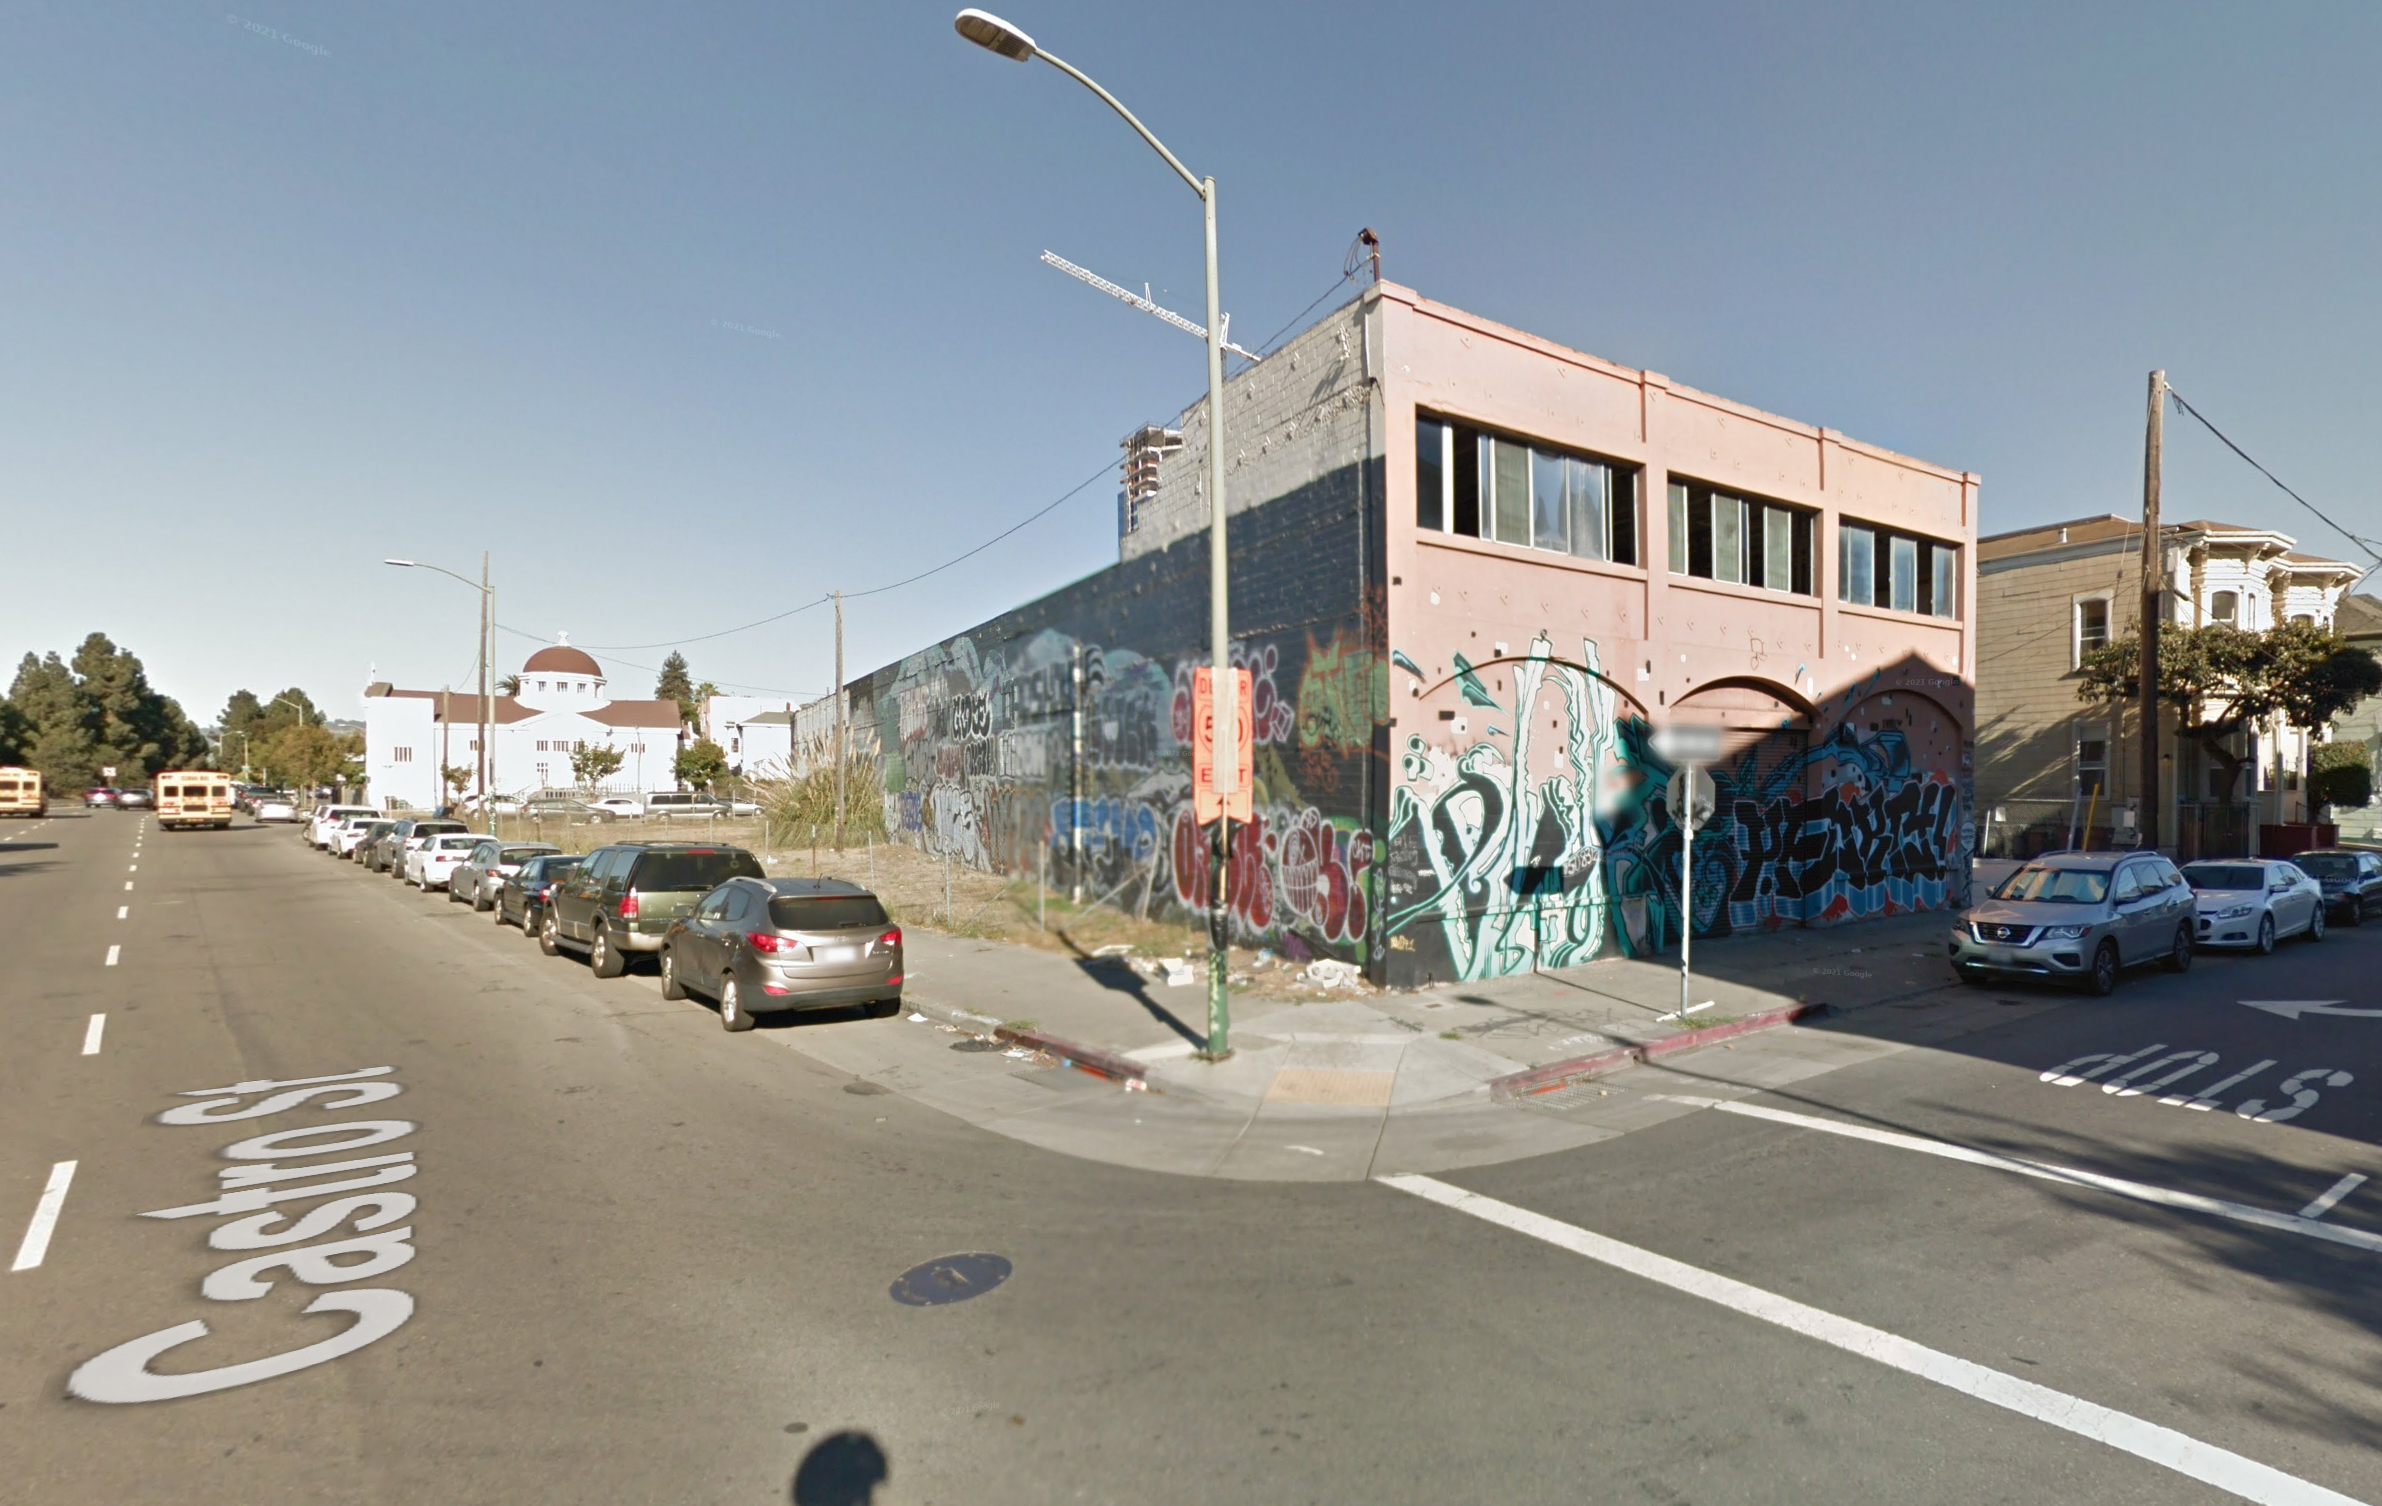 685 9th Street, image via Google Street View